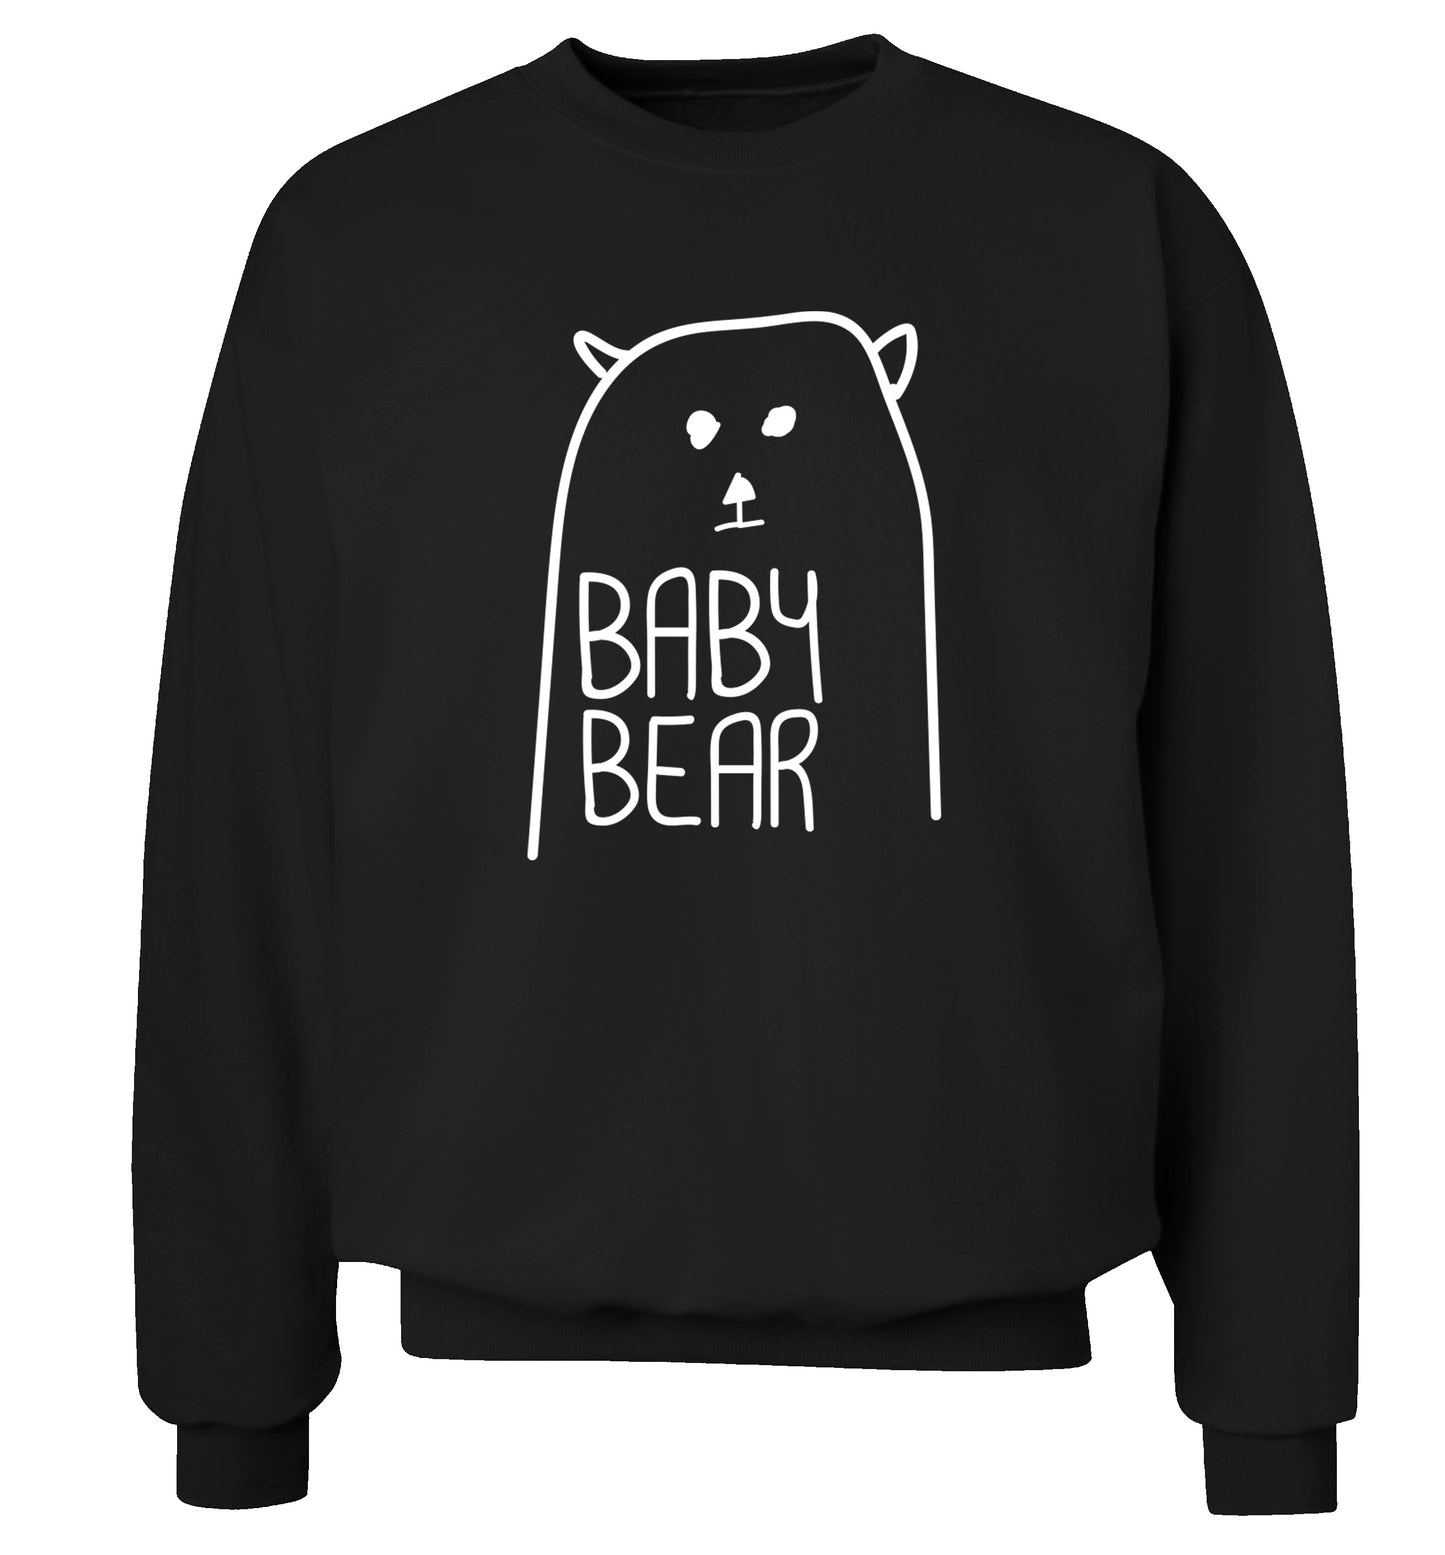 Baby bear Adult's unisex black Sweater 2XL